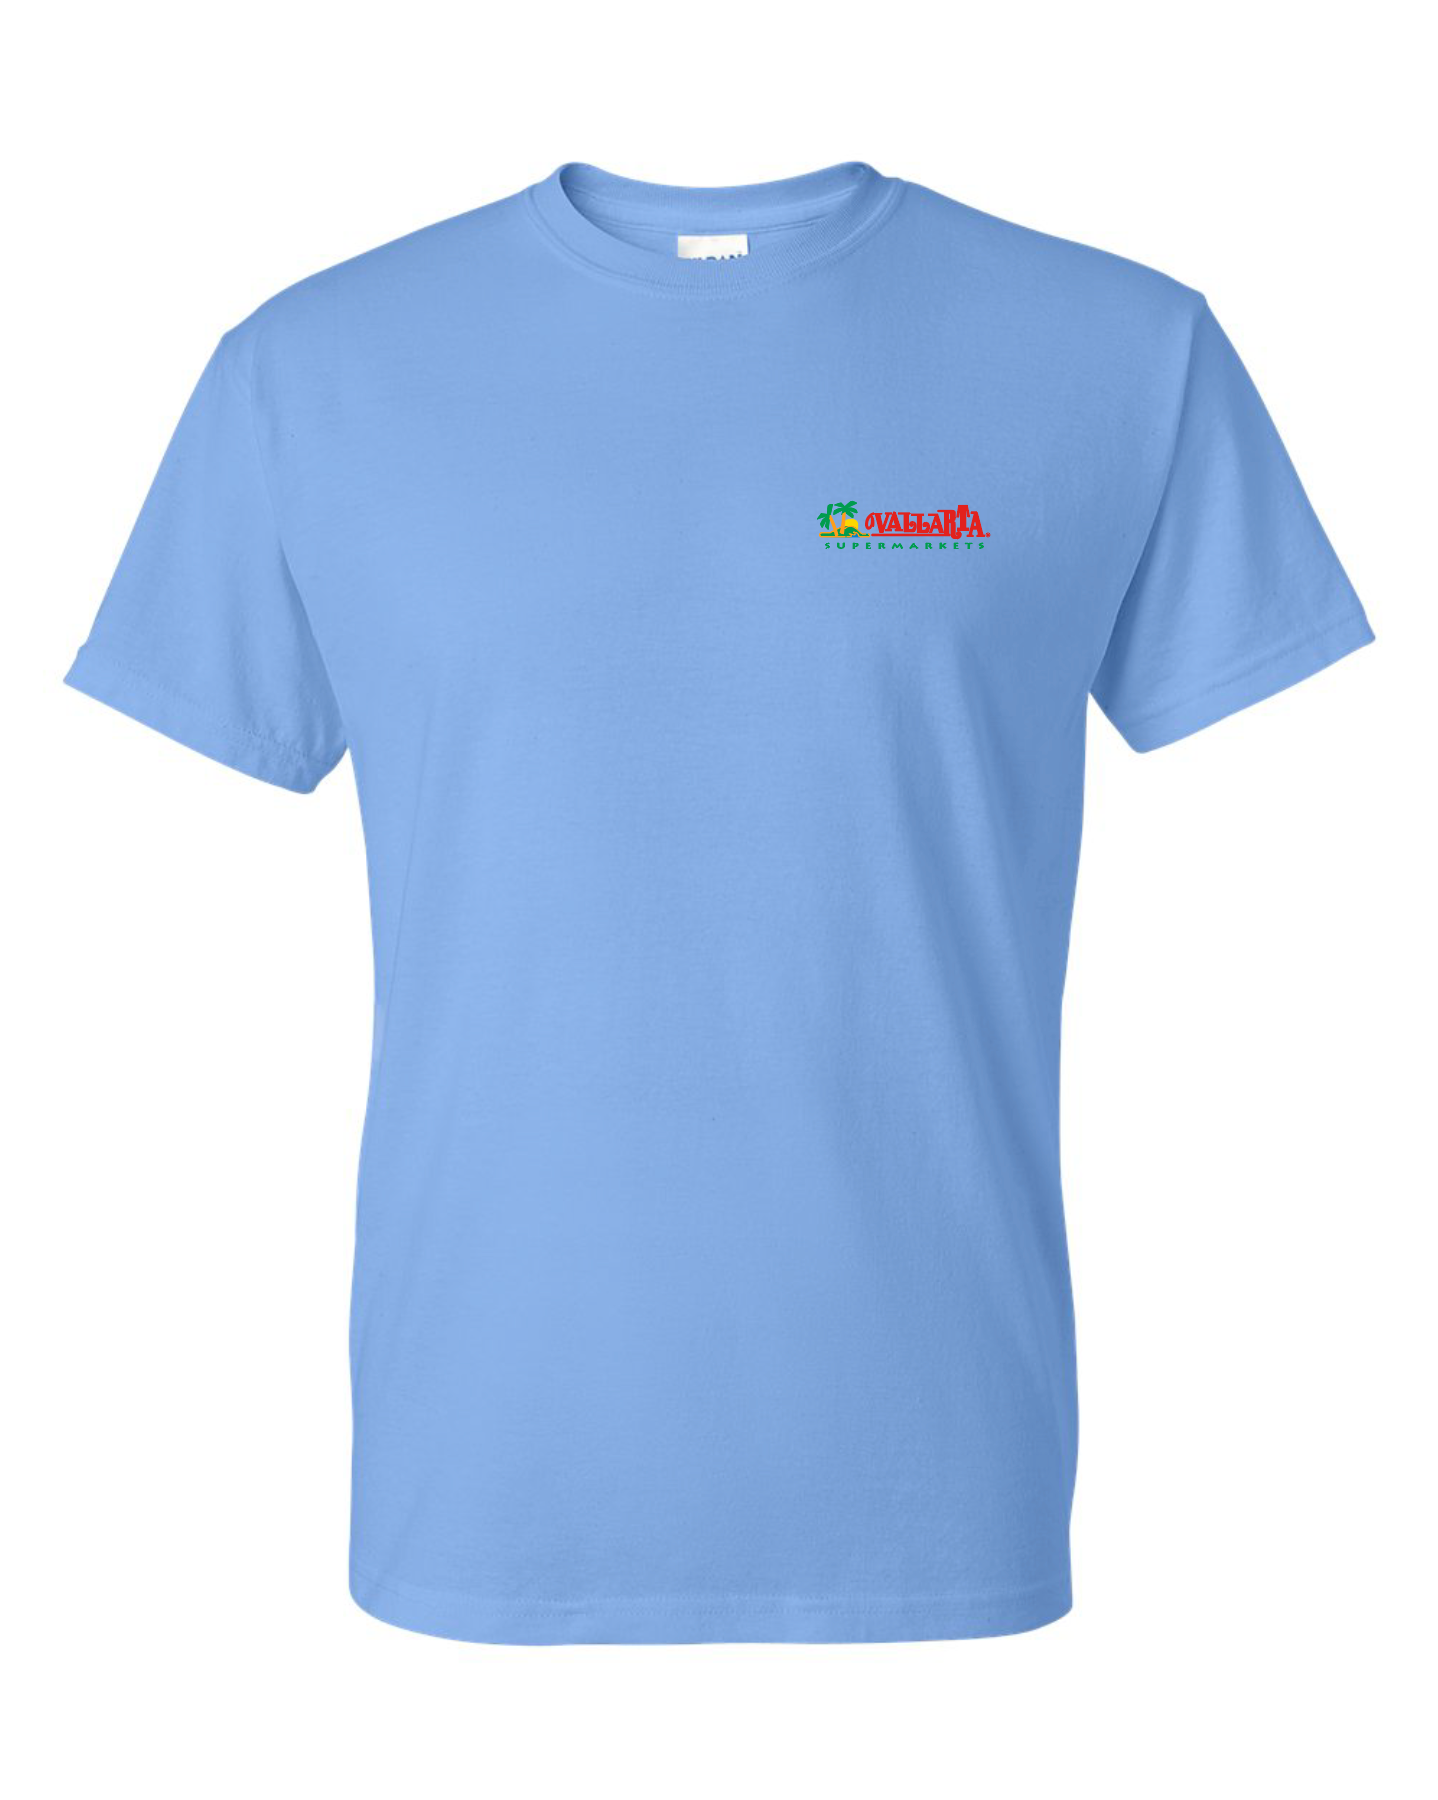 Men's Low Roller T-shirt in Vallarata Blue